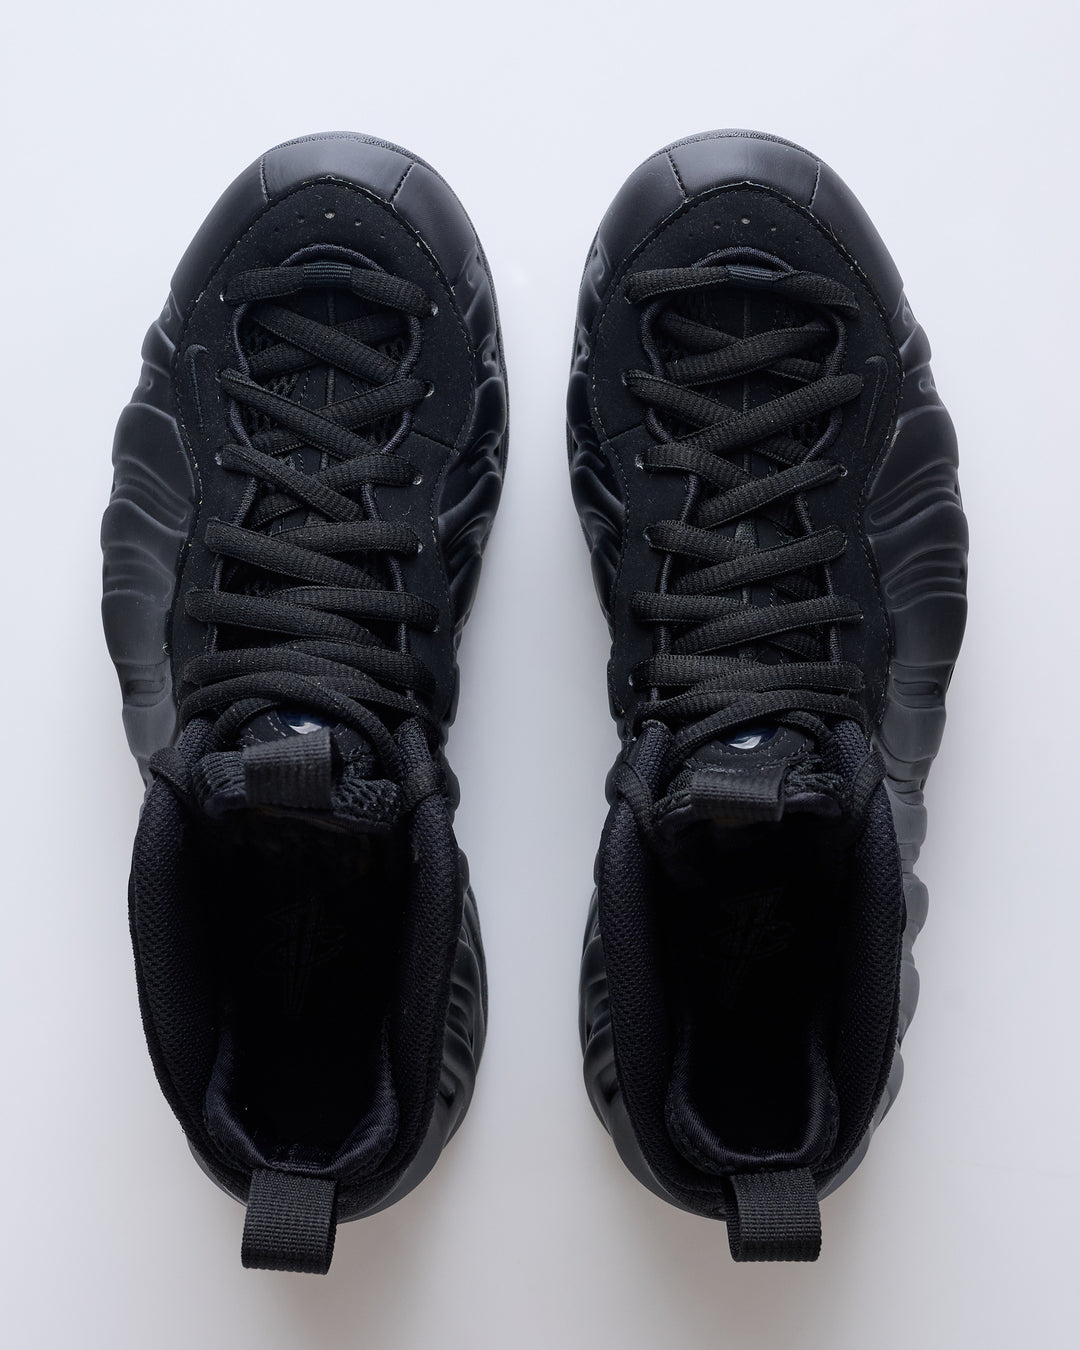 Nike Men's Air Foamposite One Black/Anthracite-Black